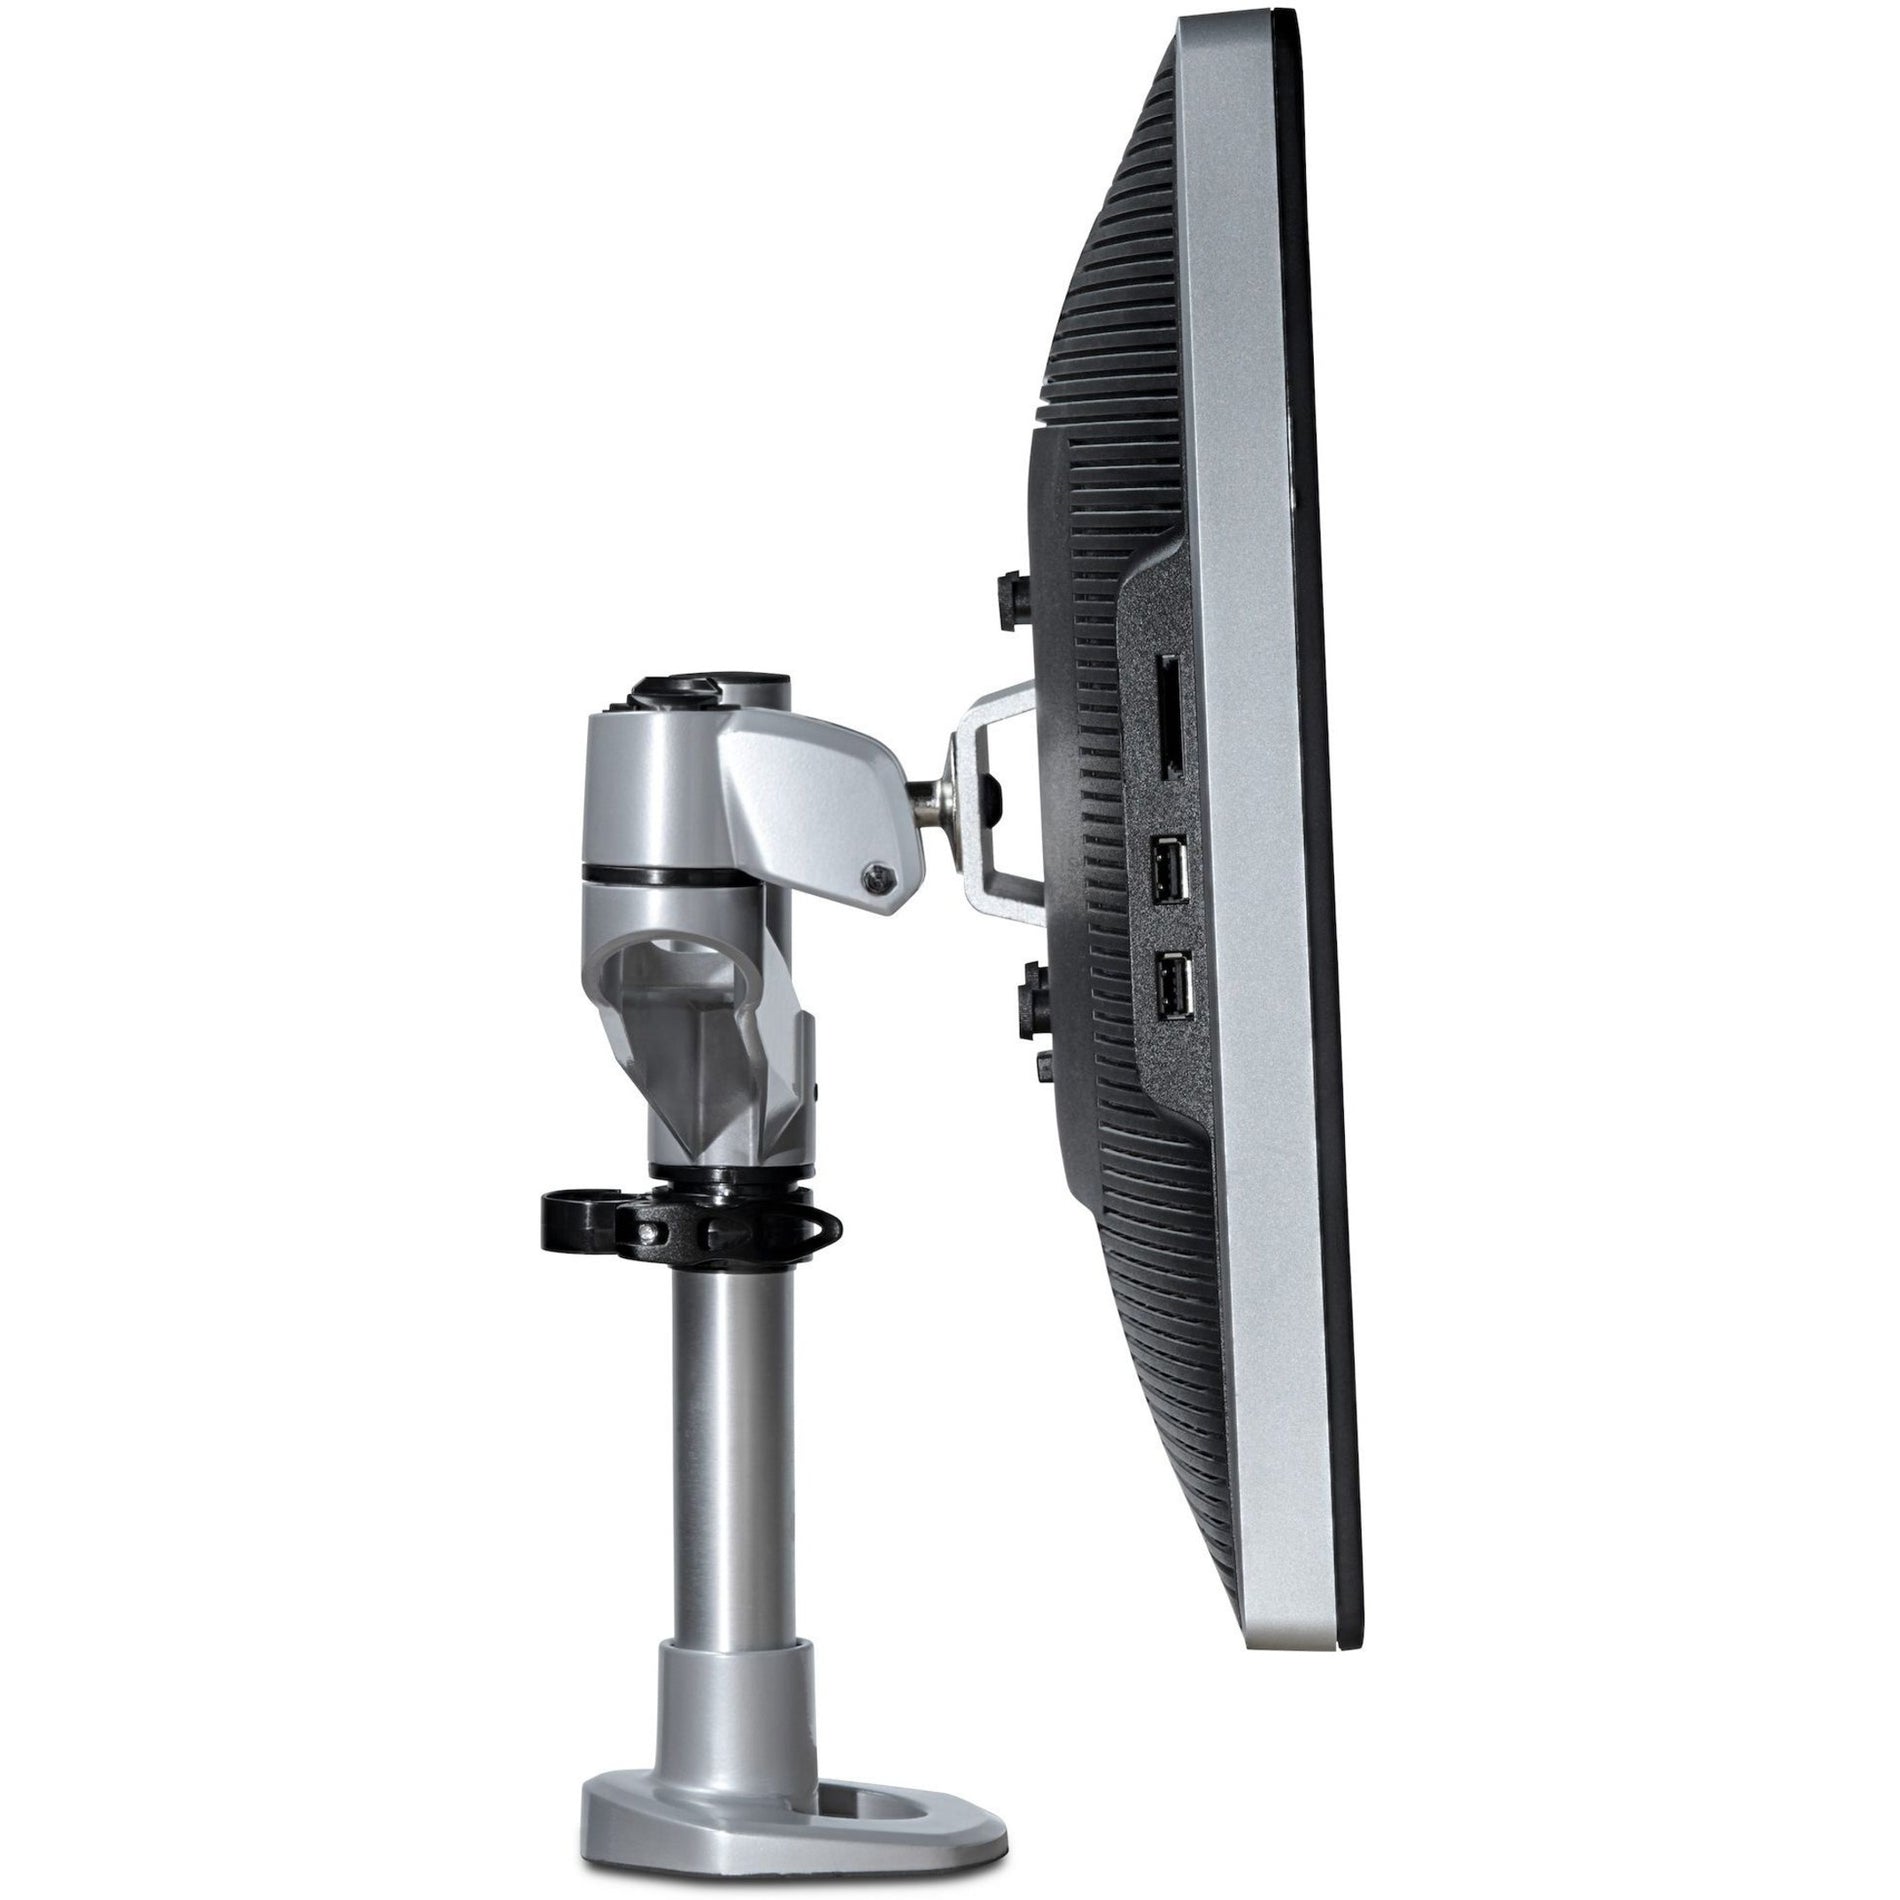 StarTech.com ARMPIVOTB2 Desk Mount Monitor Arm - Premium Aluminum Articulating, 360° Rotation, Swivel, 30.9 lb Load Capacity